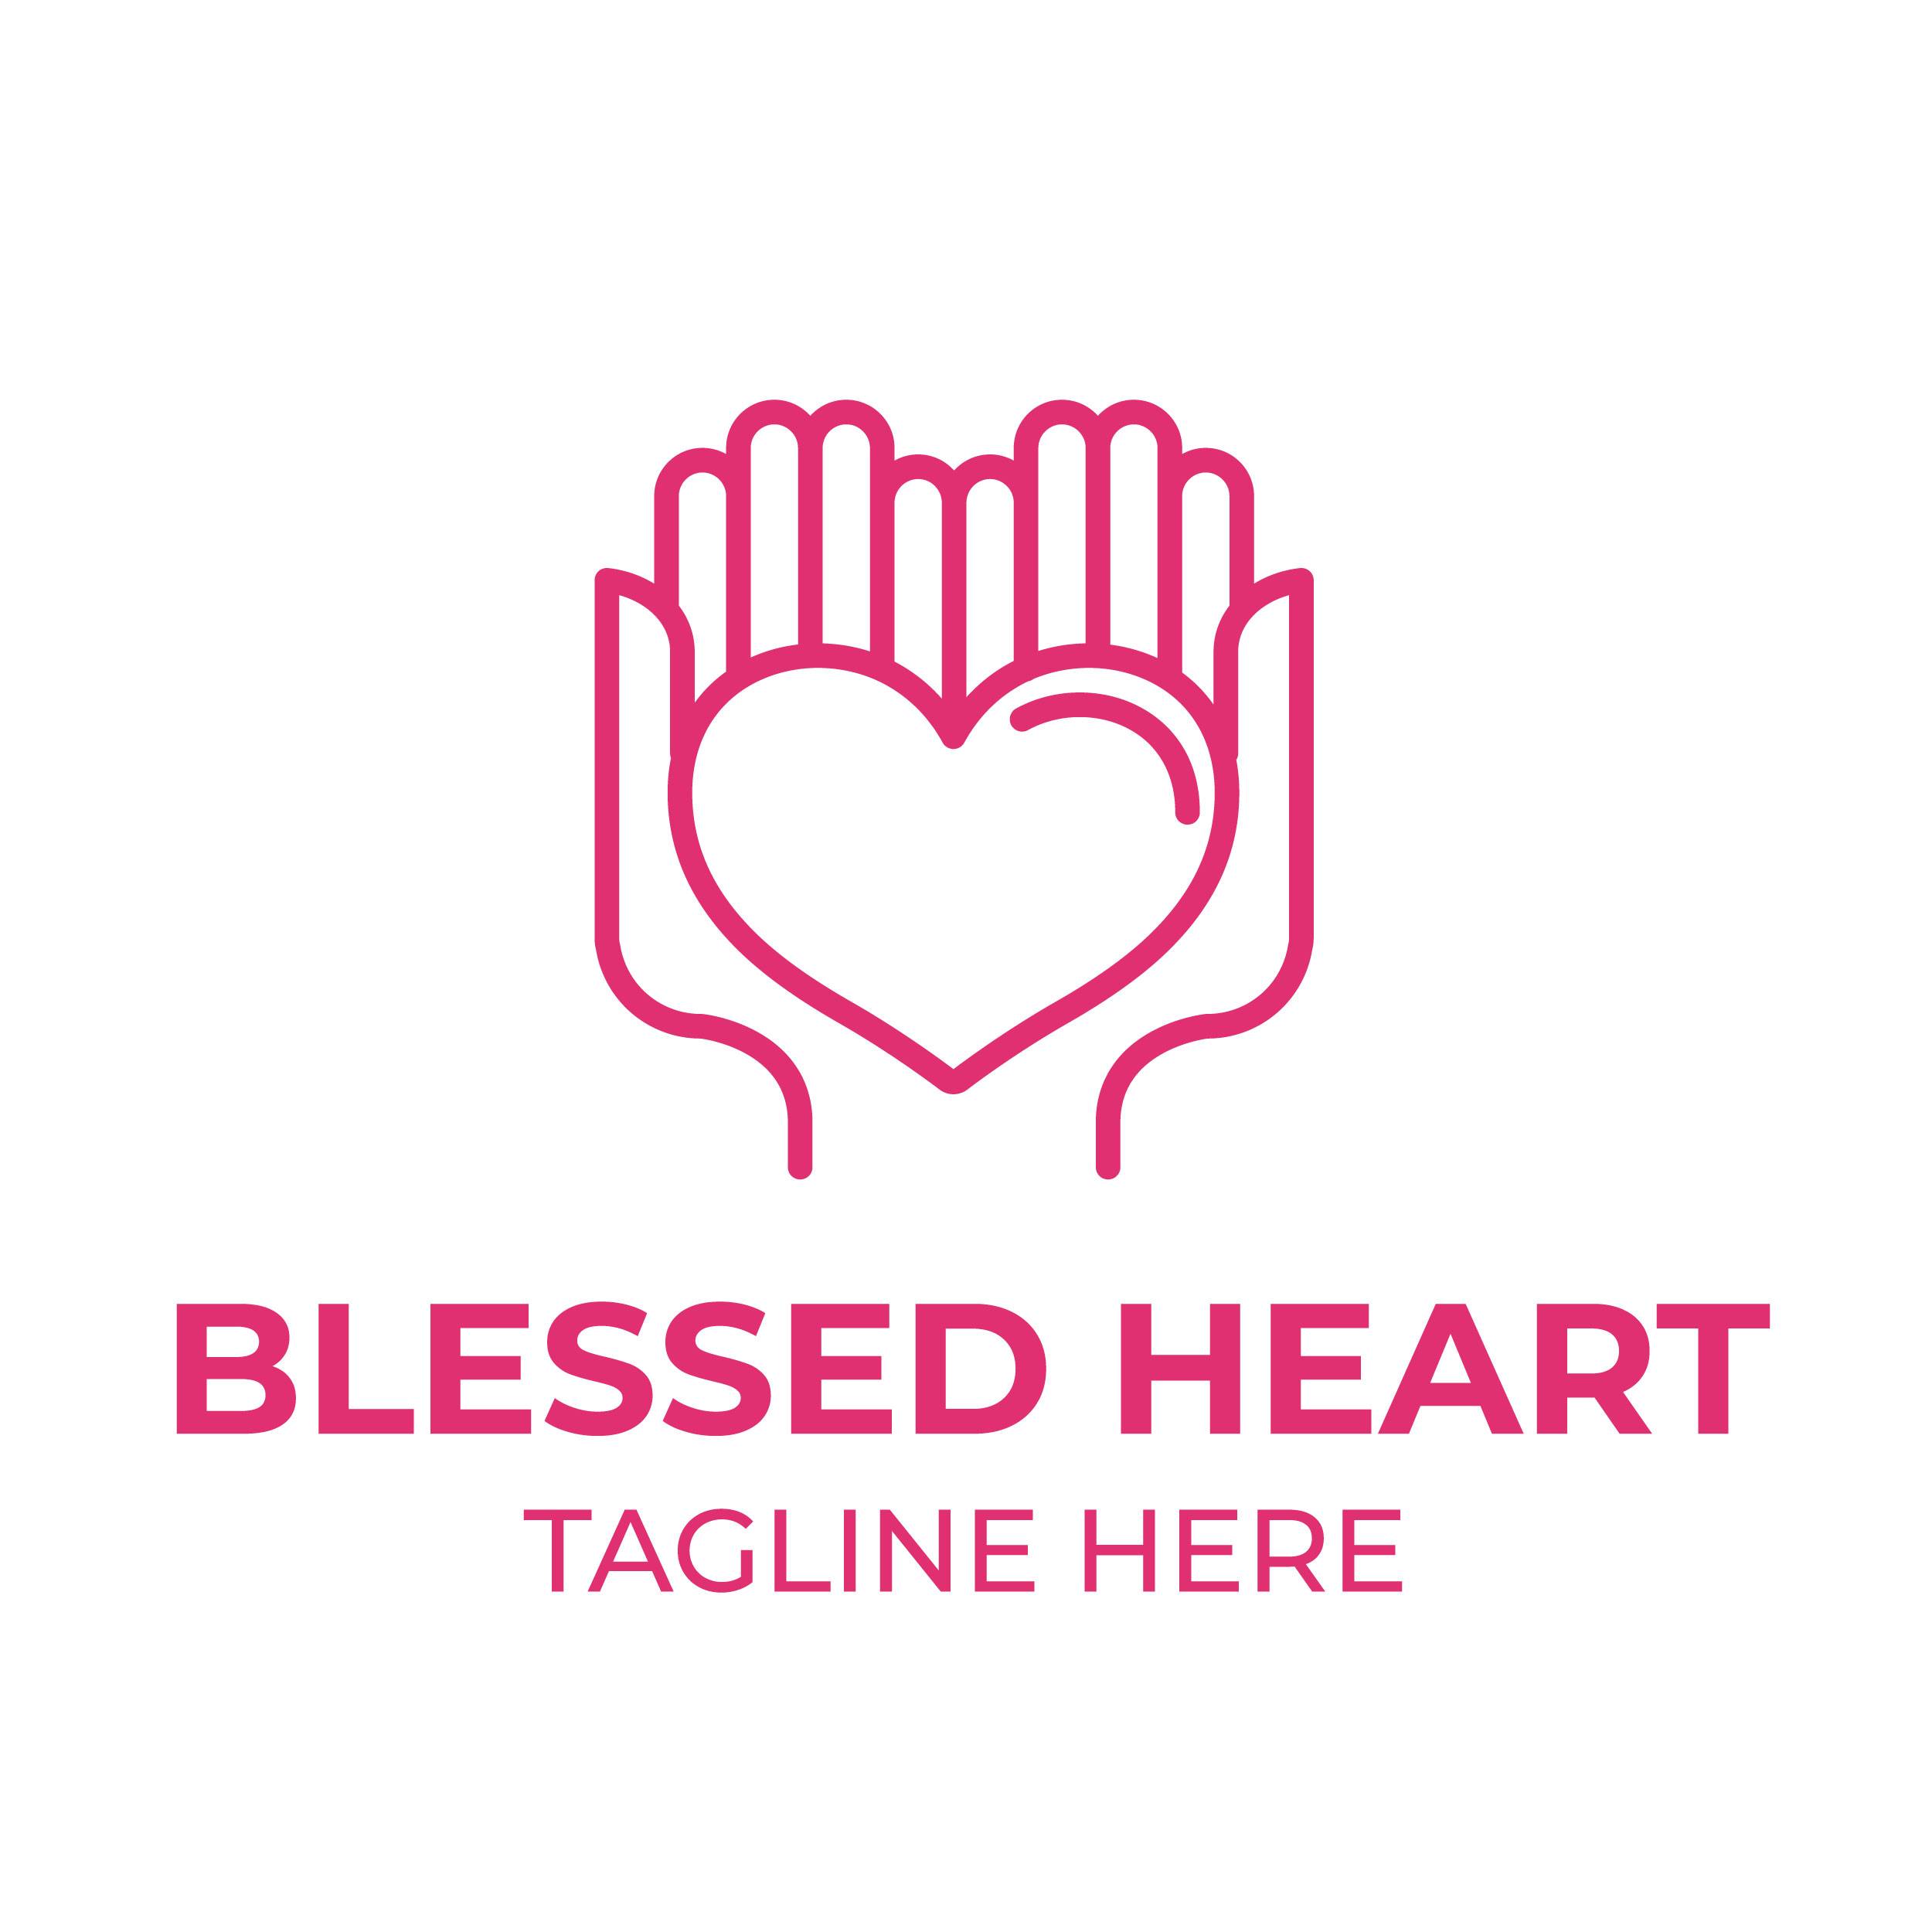 Heart in hand logo design